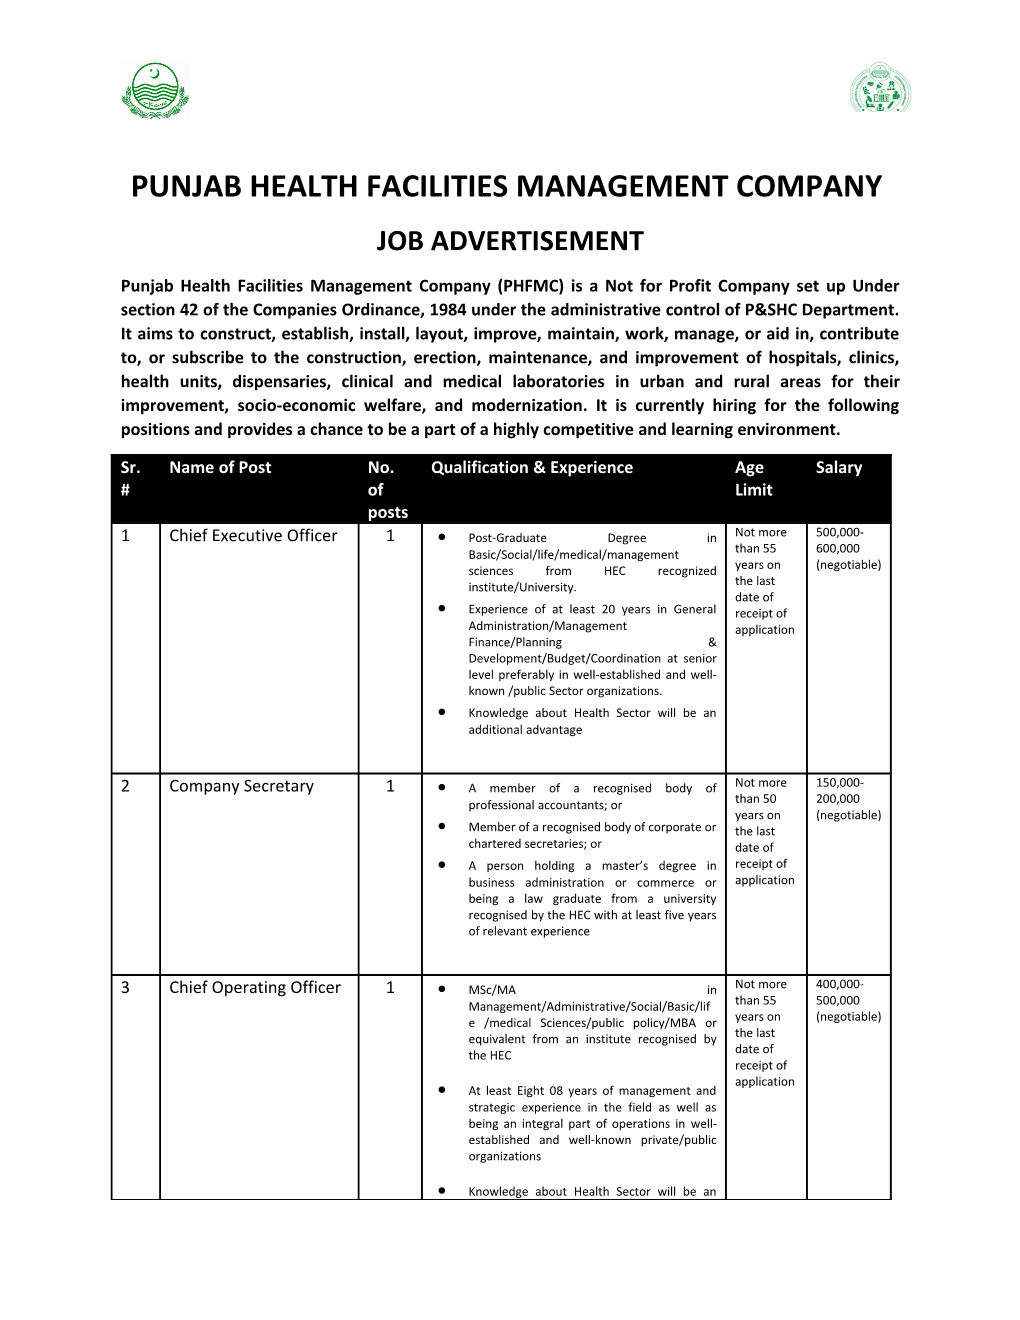 Punjab Health Facilities Management Company